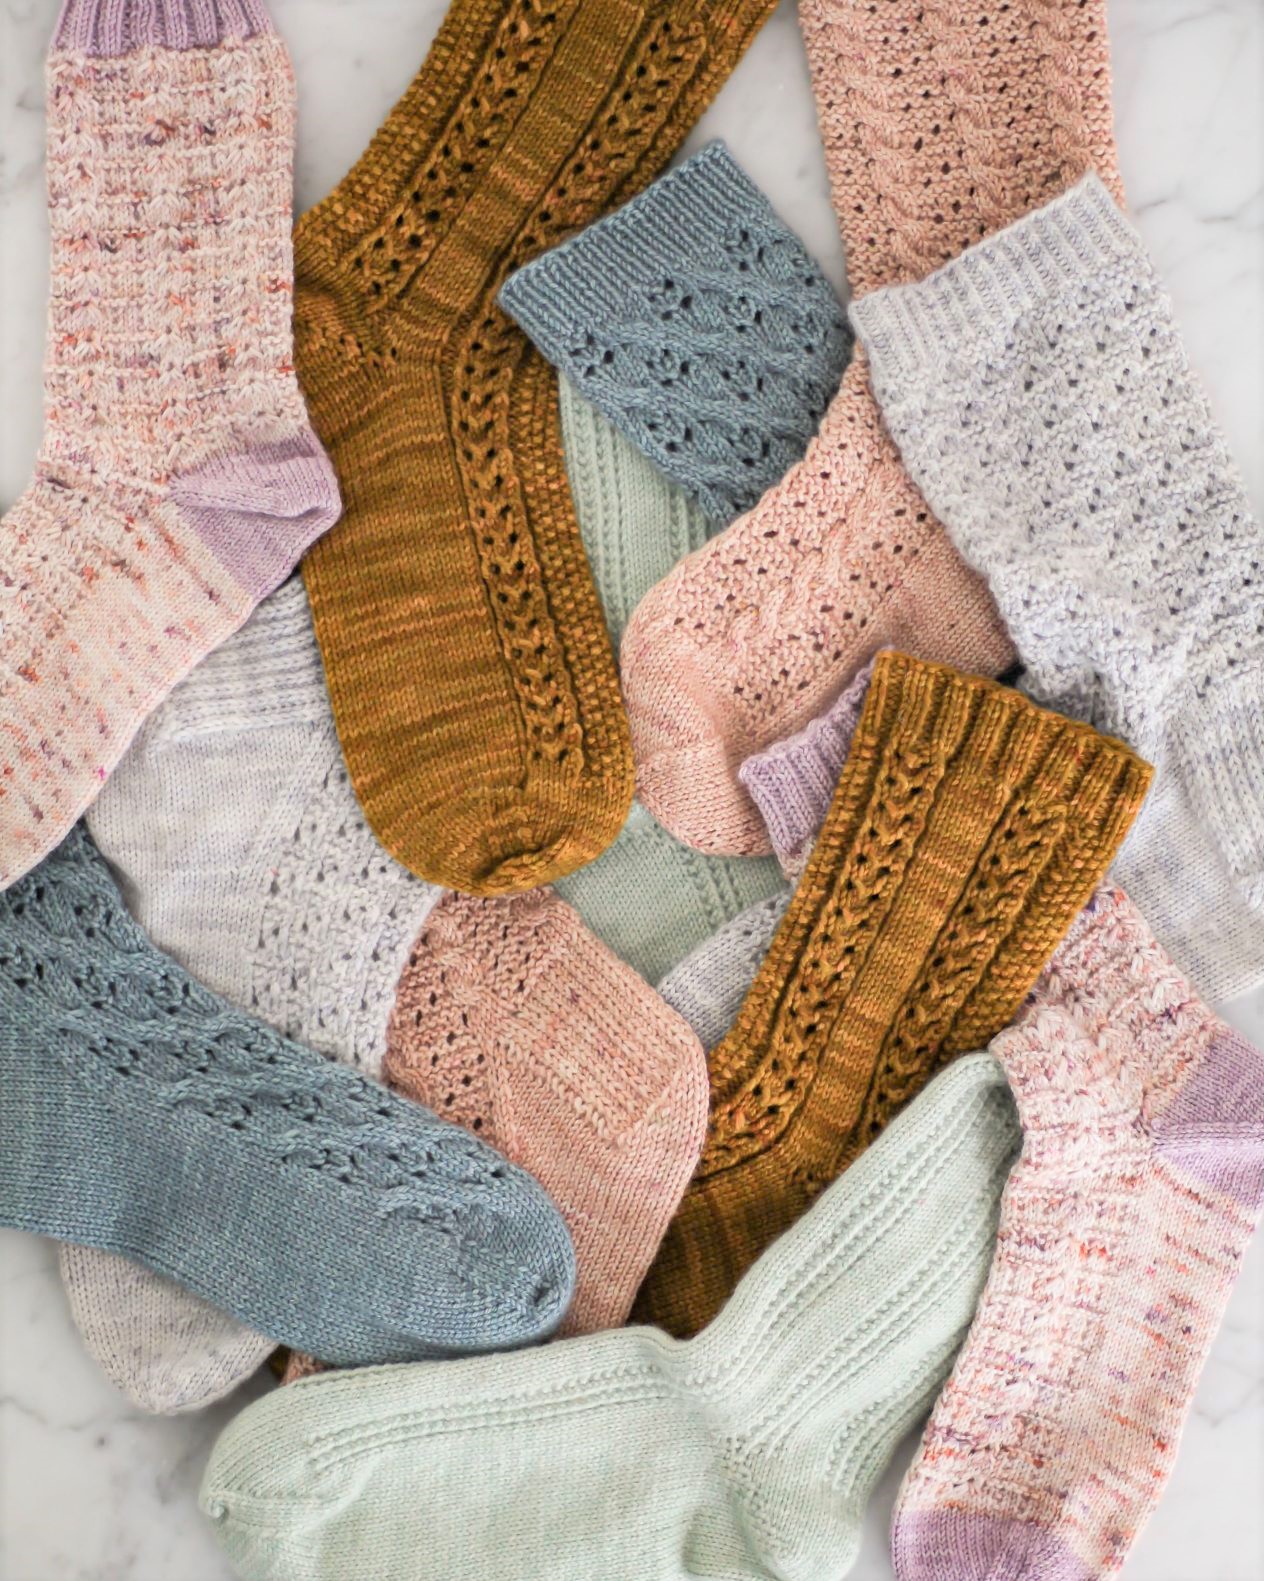 Knitting Toe-Up Socks vs. Cuff-Down Socks: Which is Best? - A Bee In The Bonnet